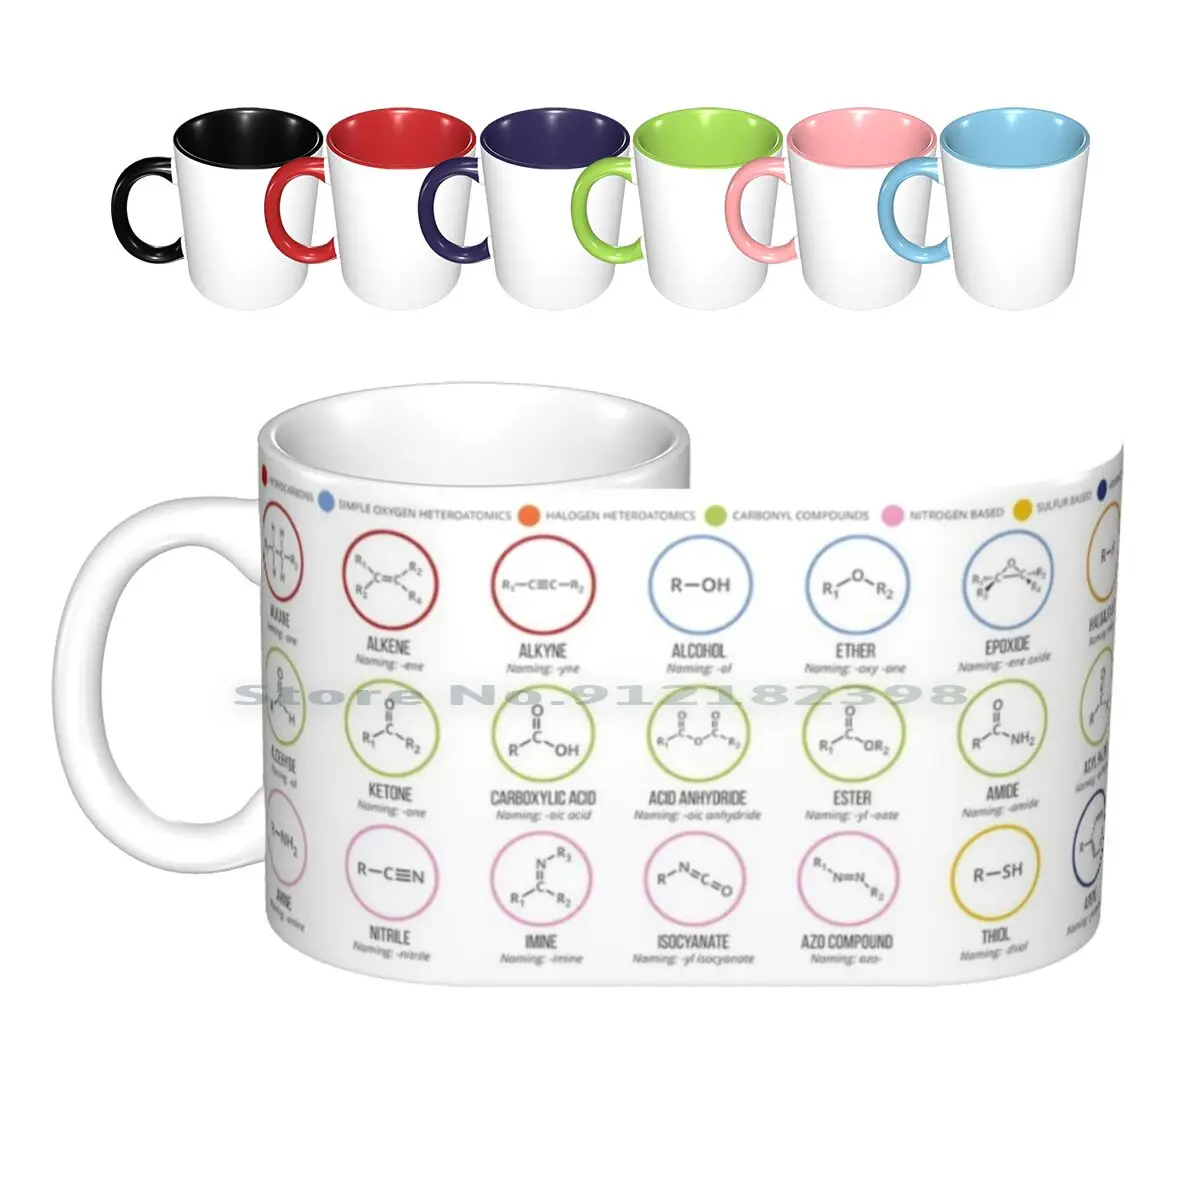 

Functional Groups In Organic Chemistry Ceramic Mugs Coffee Cups Milk Tea Mug Organic Chemistry Chemistry Science Infographic